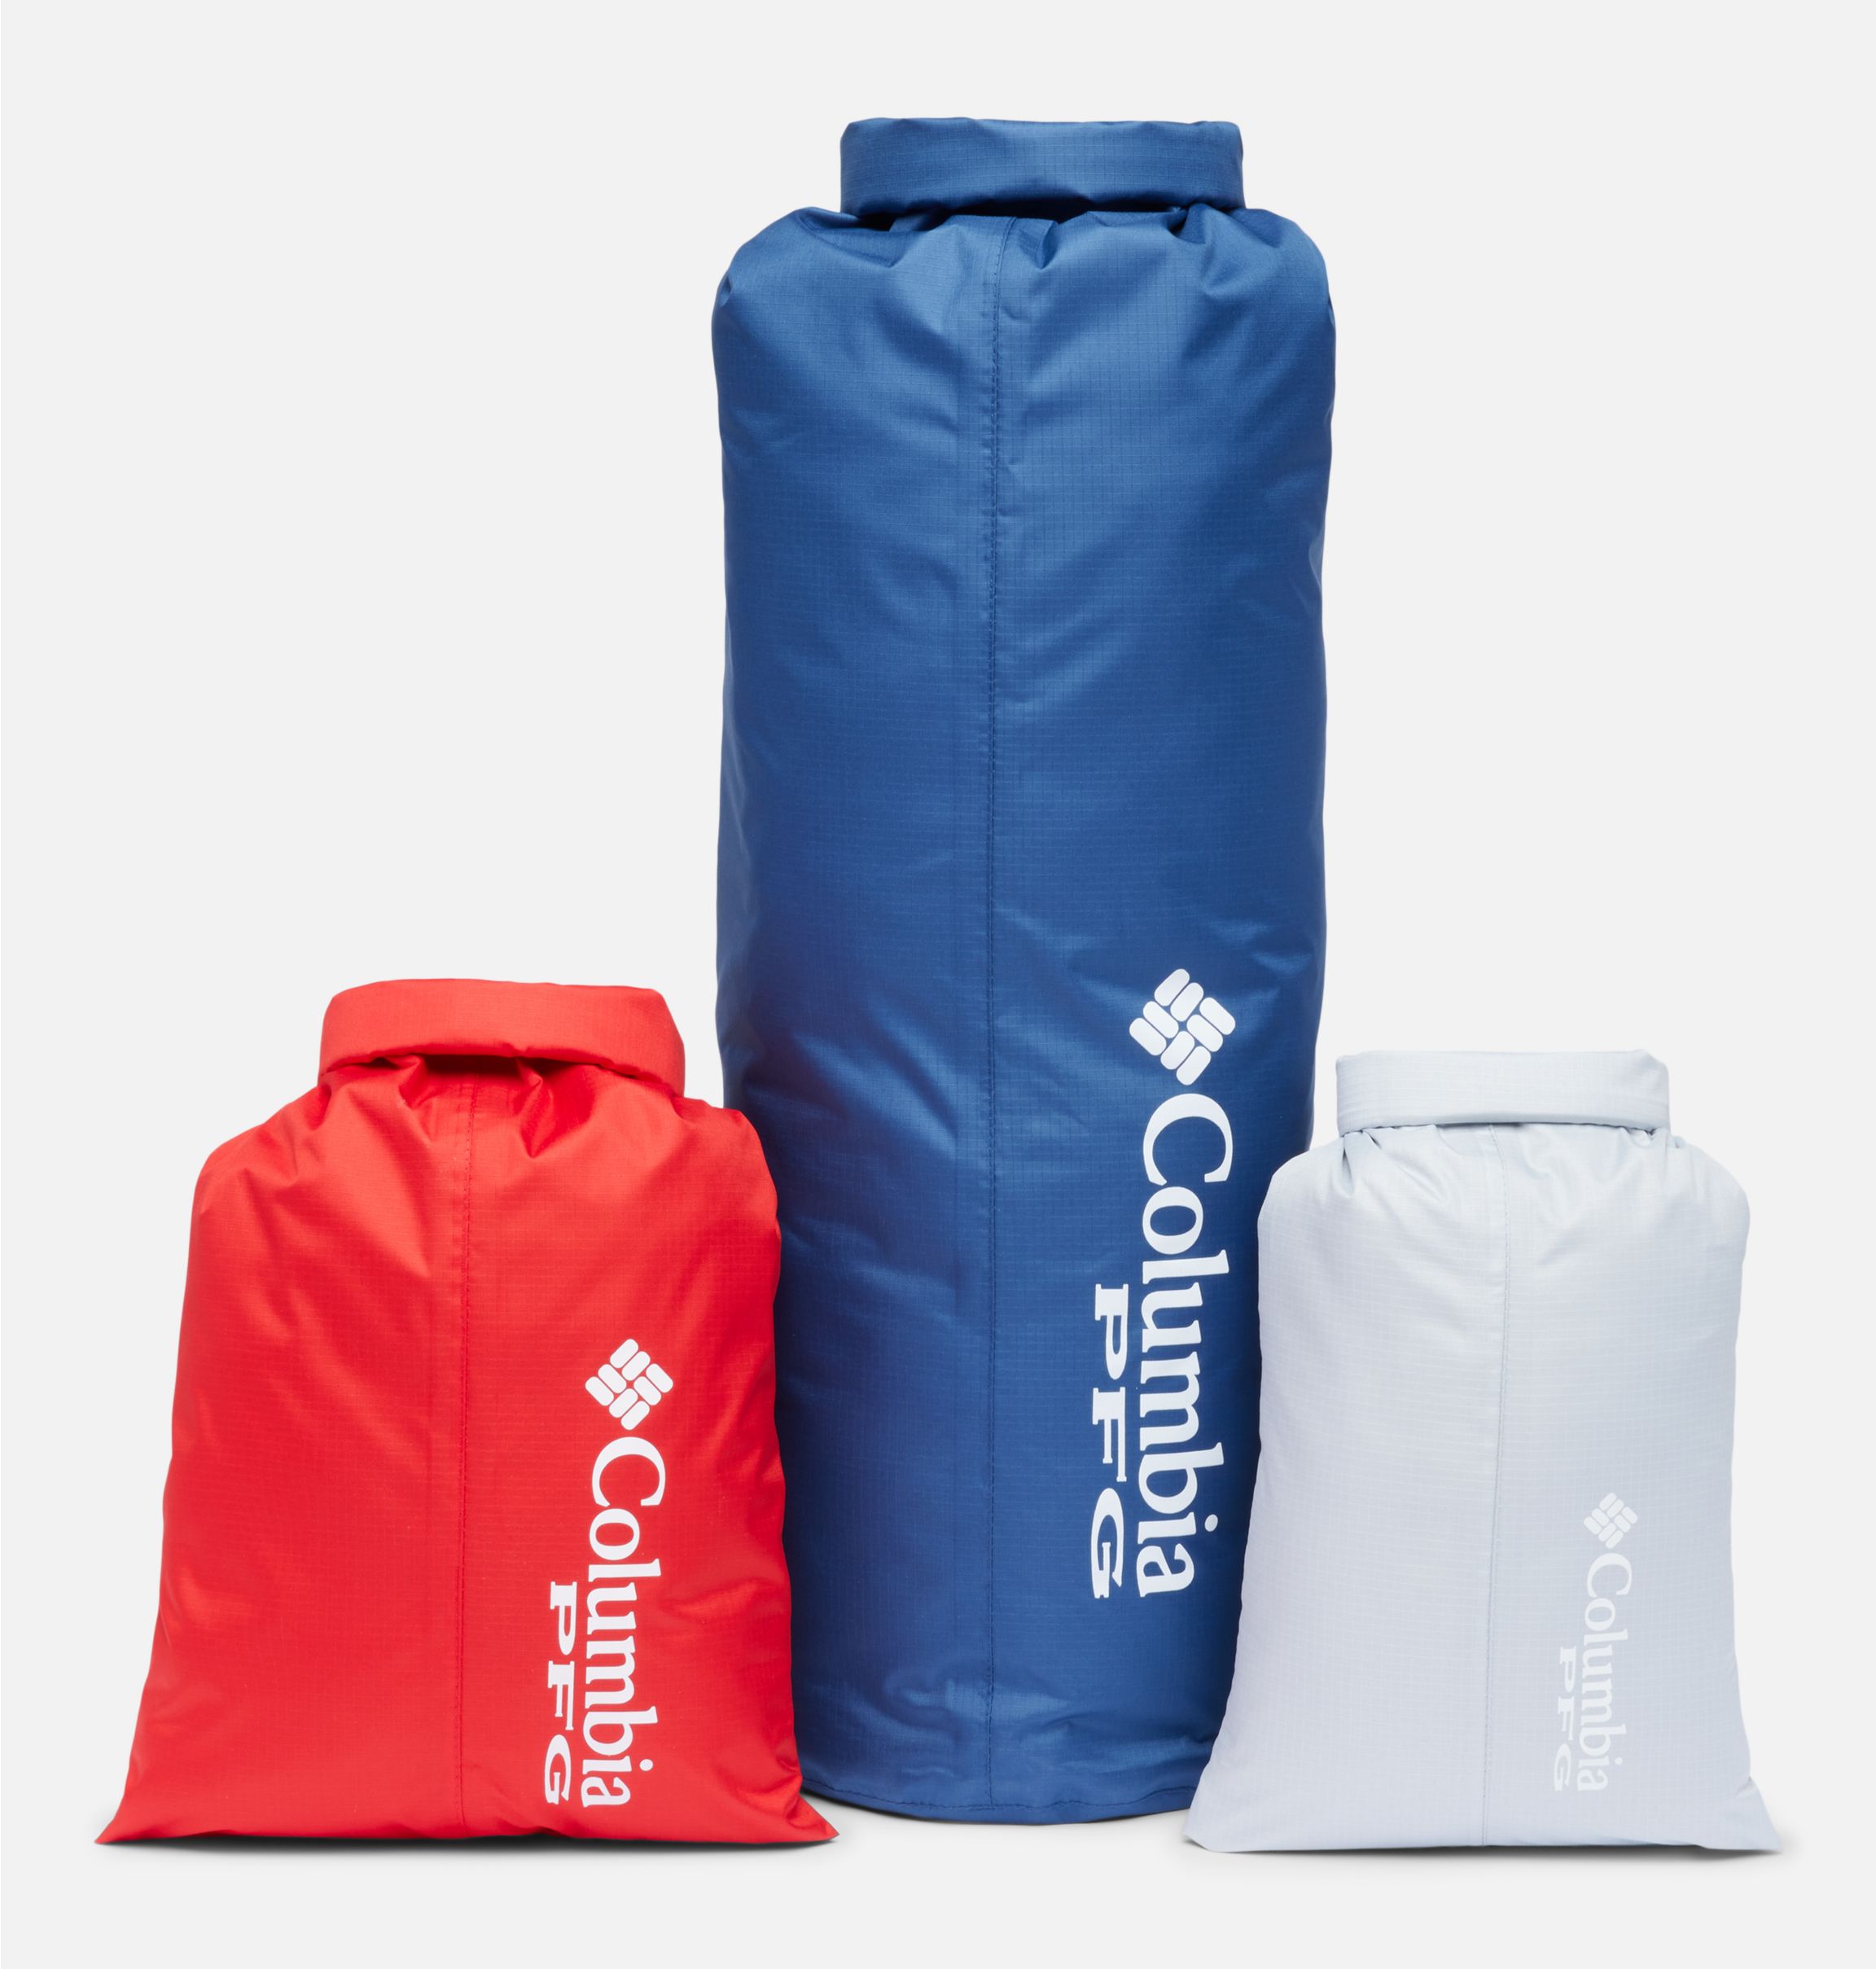 Complete Hurricane Preparedness Kits 2 / 3 / Waterproof Dry Bag